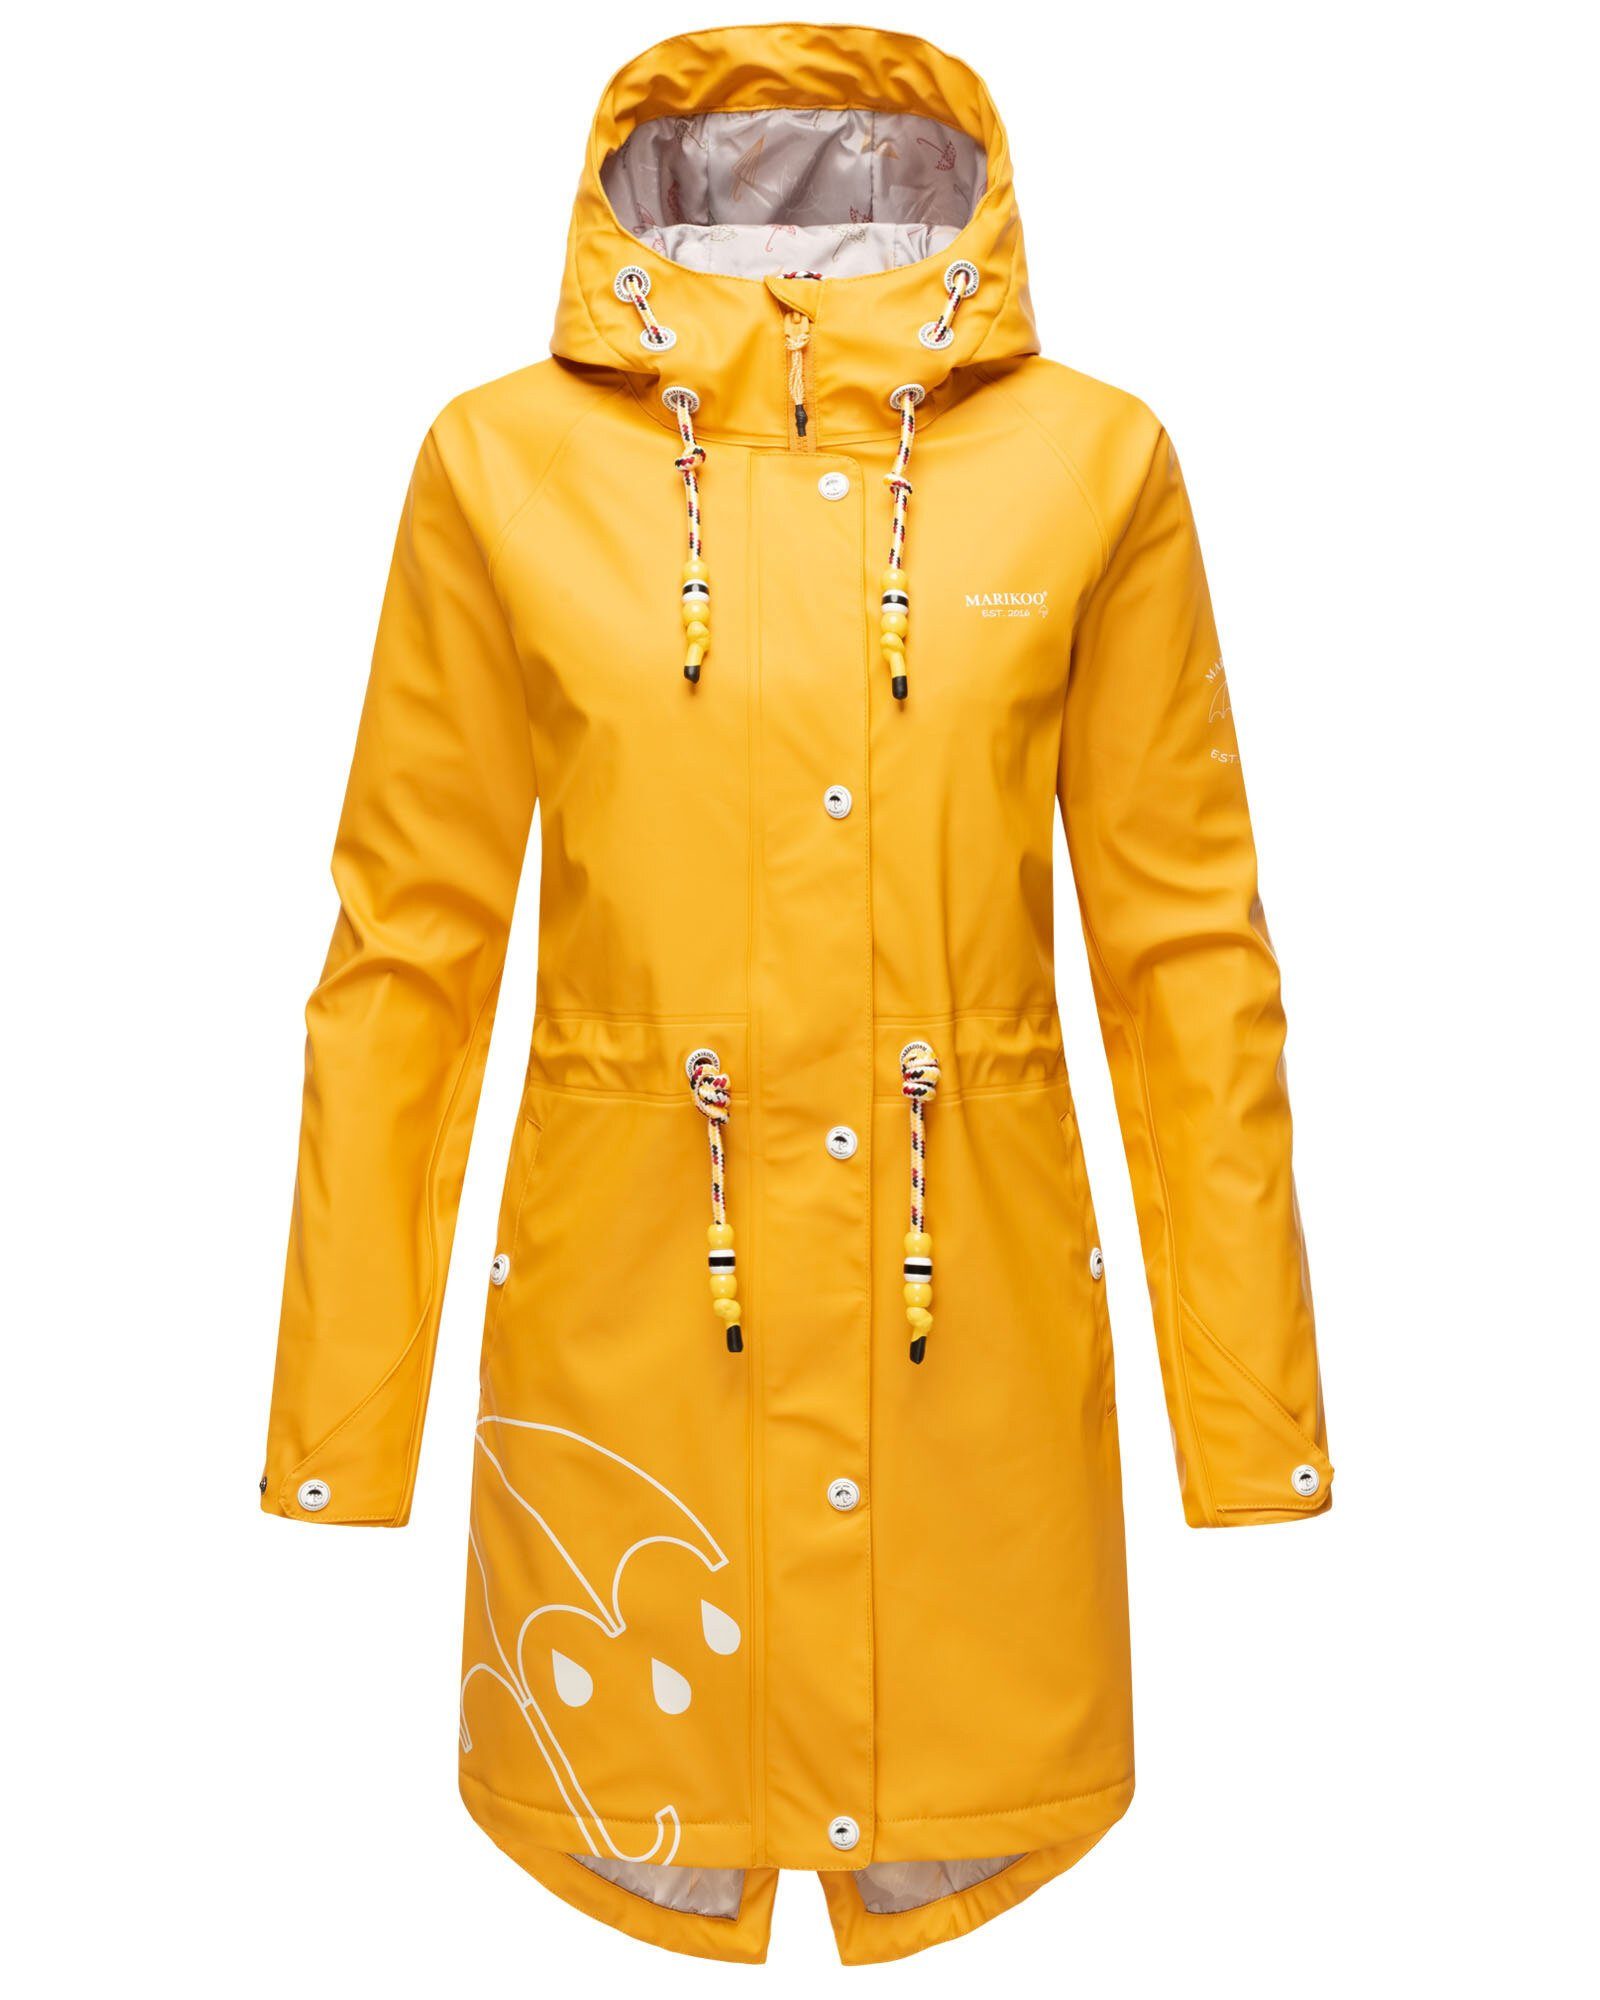 Marikoo Outdoorjacke Dancing Umbrella mit einer großen Kapuze Amber Yellow